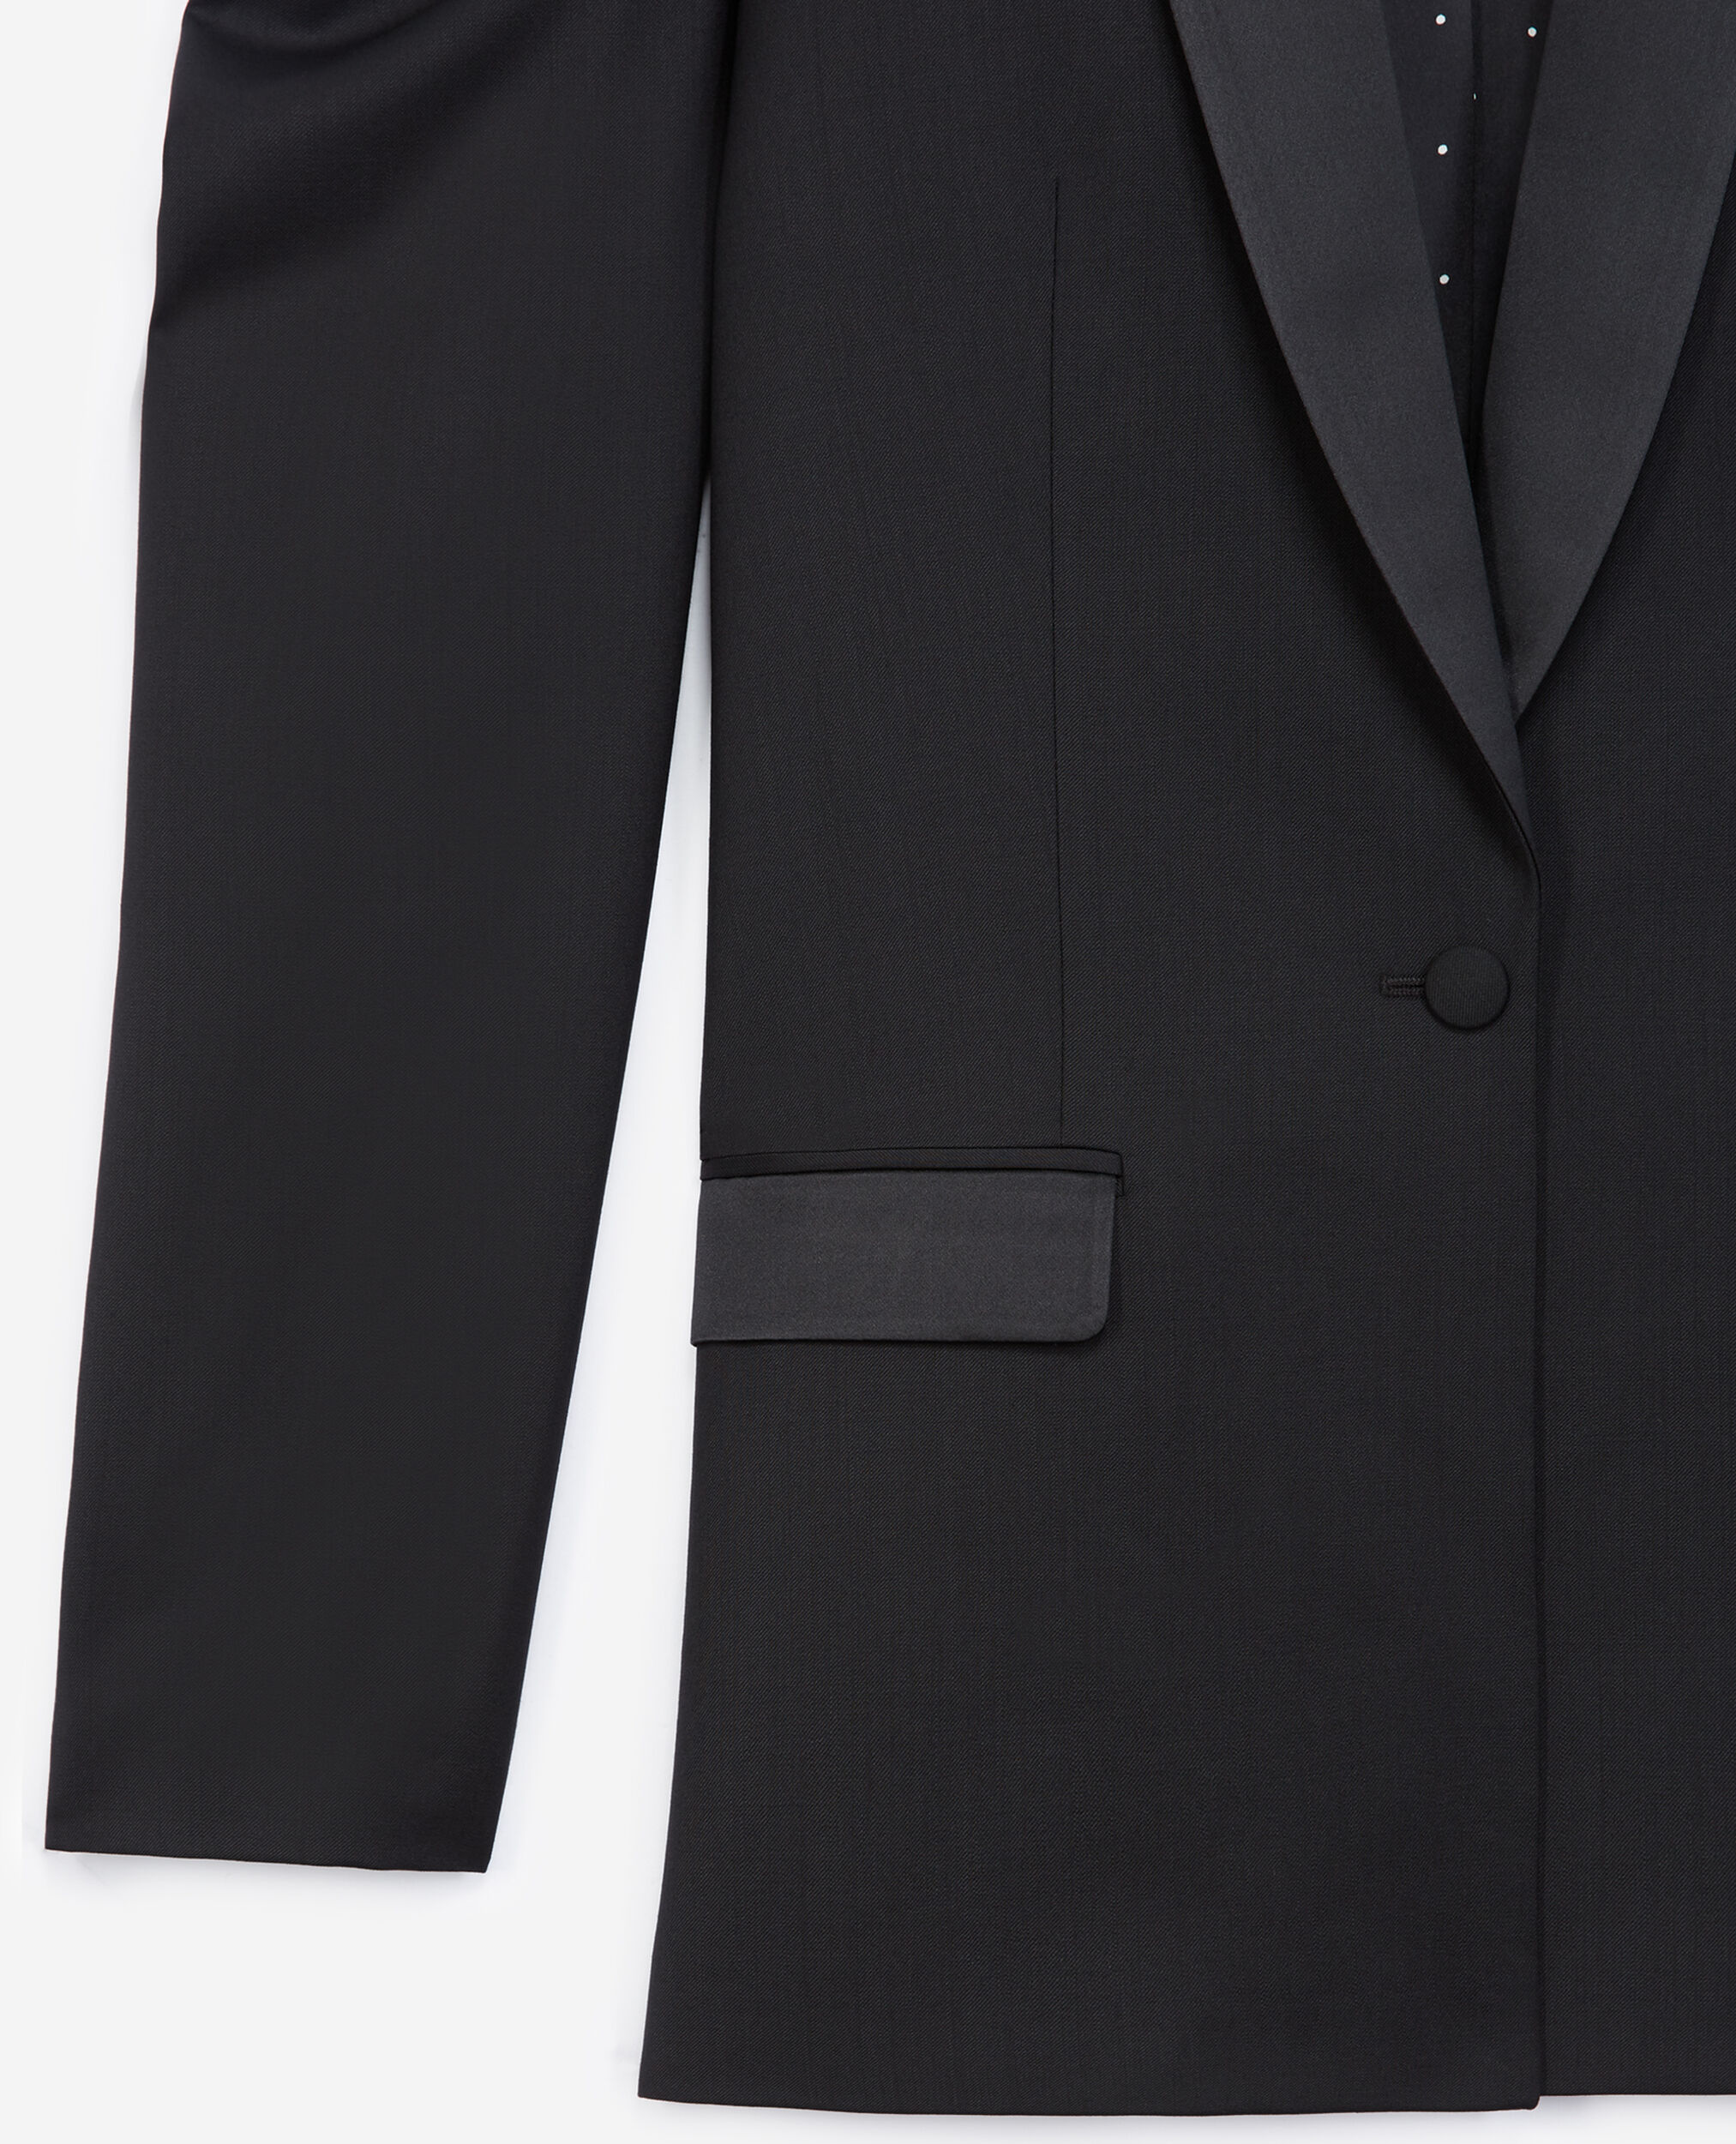 Black wool tuxedo jacket, BLACK, hi-res image number null